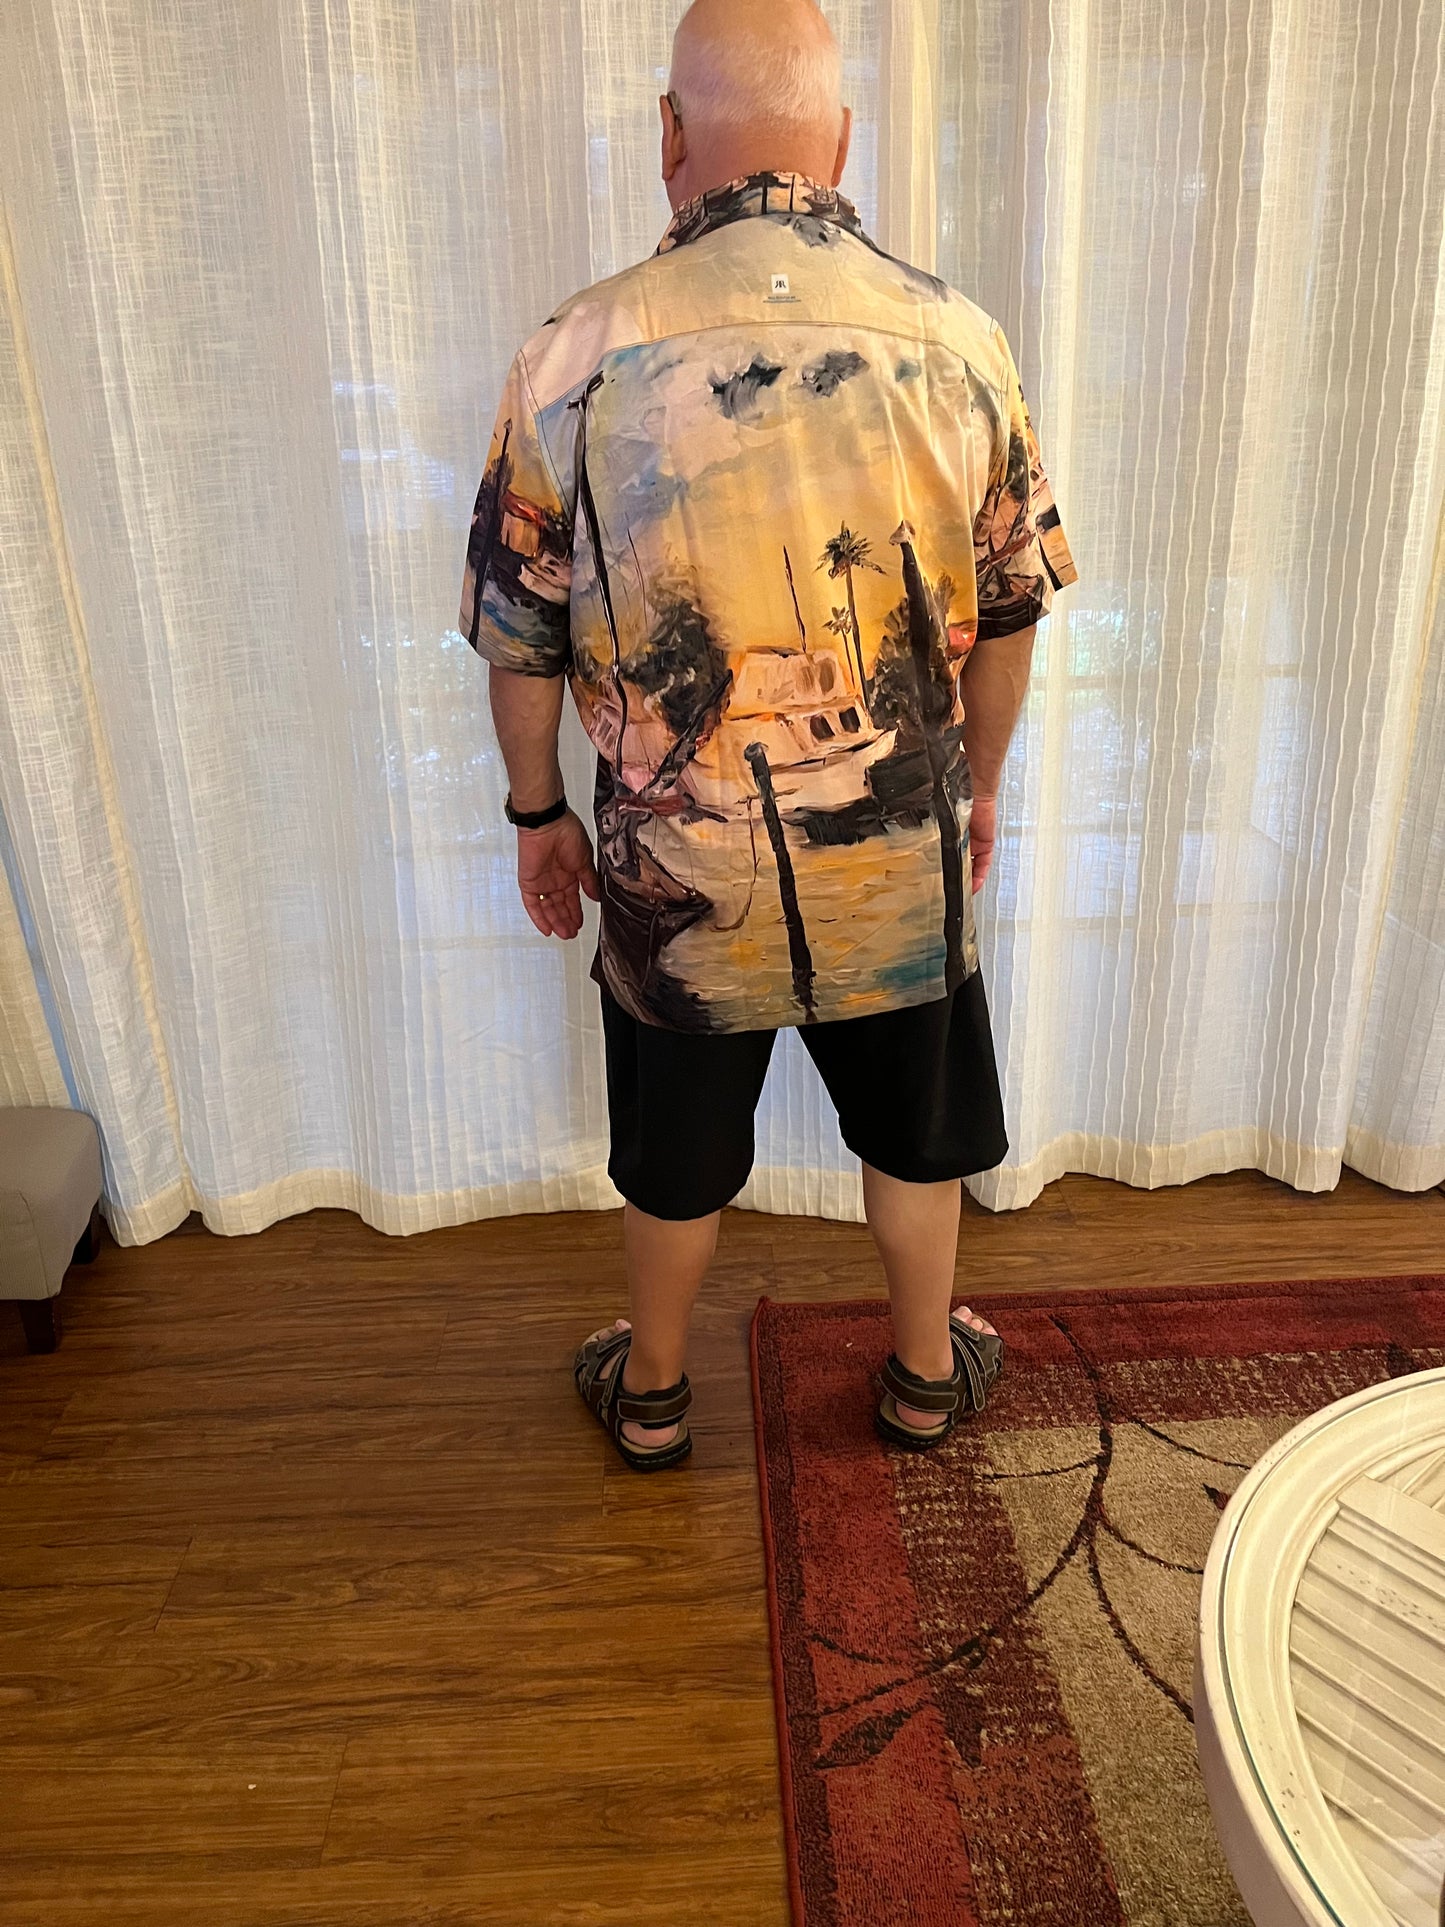 Jeanne's Harbor (Sailboats) Men's Hawaiian Shirt